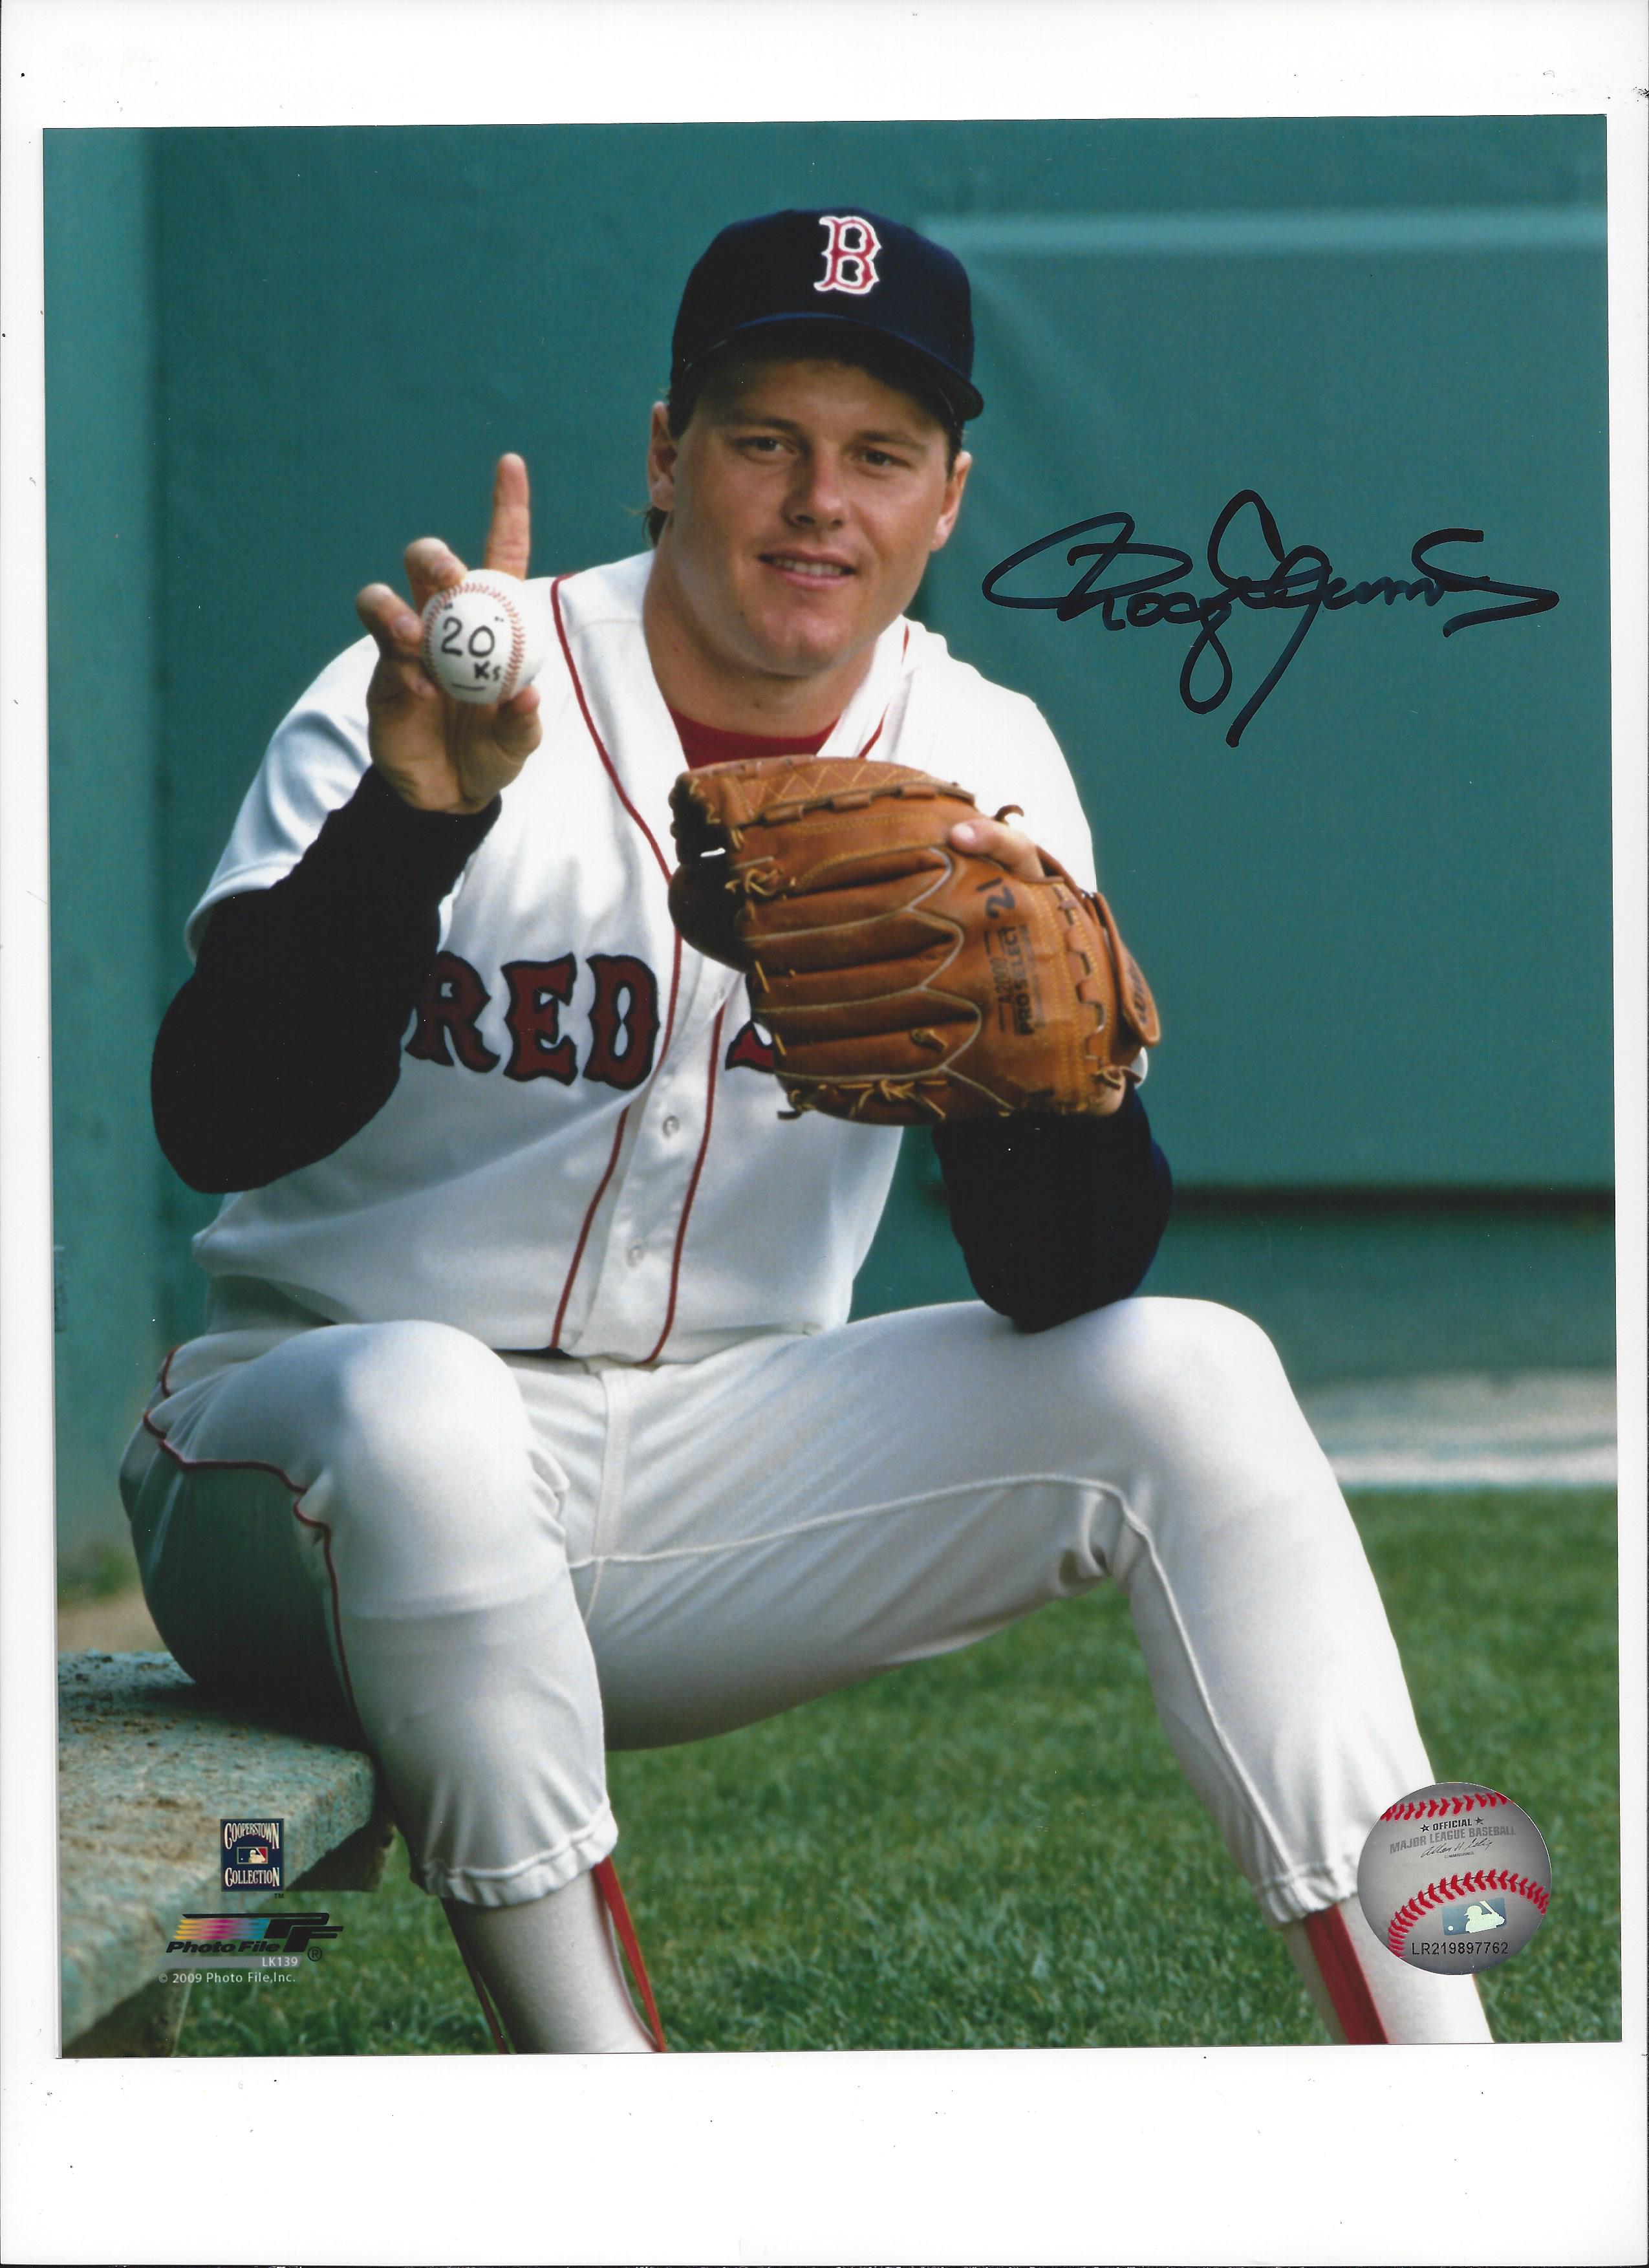 Boston Red Sox, Roger Clemens Showing 20 K's Baseball